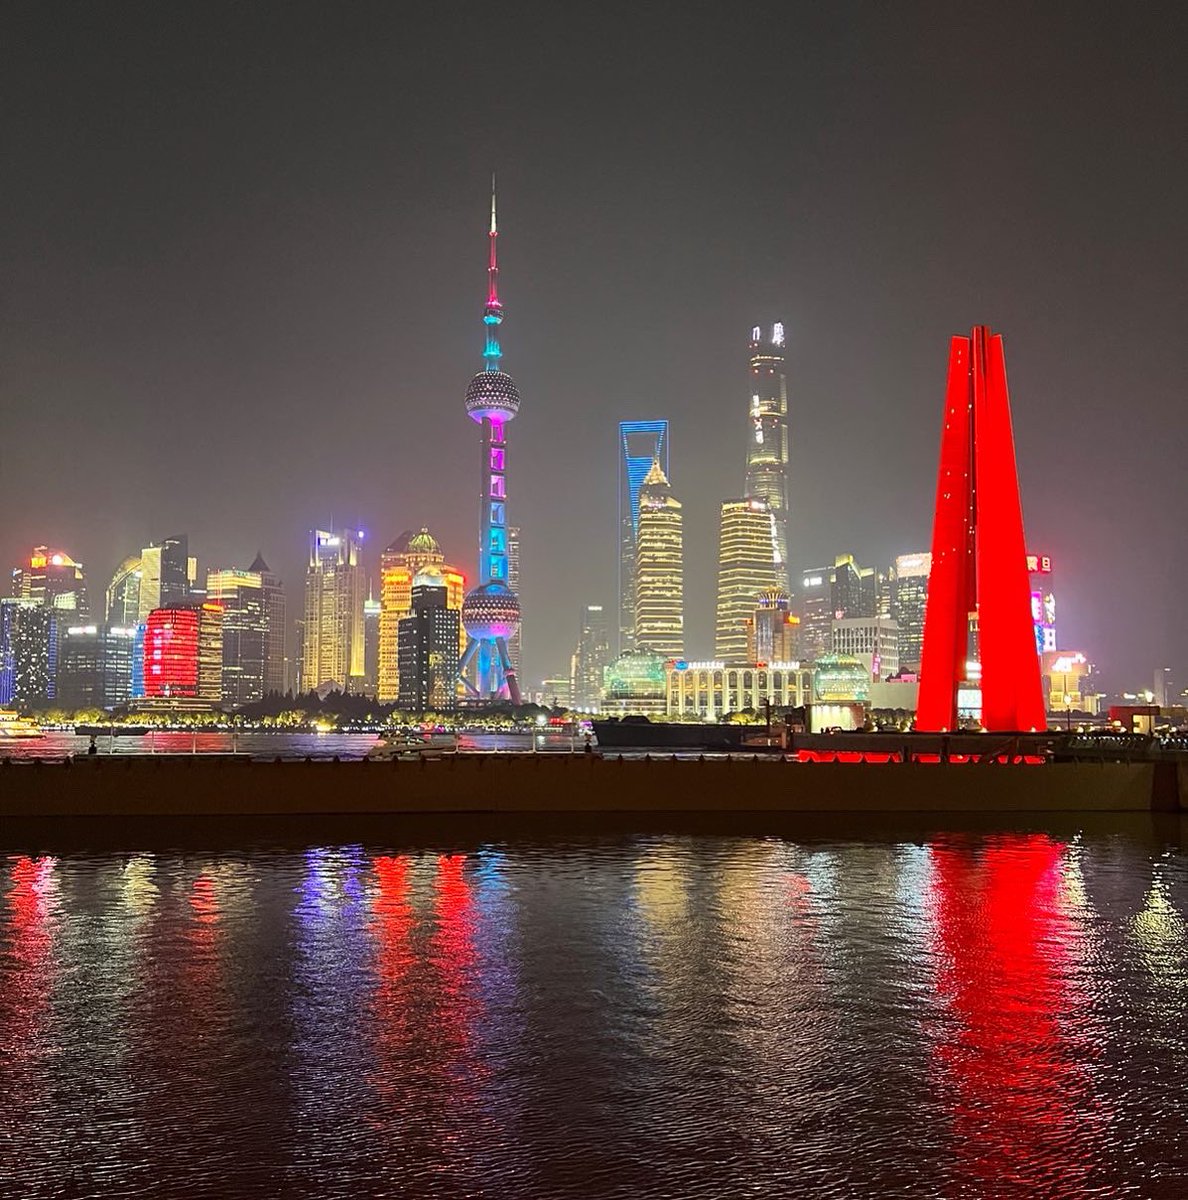 City night walk in Shanghai ❤️3

#shanghai #china #nightwalks #walk #shanghailife